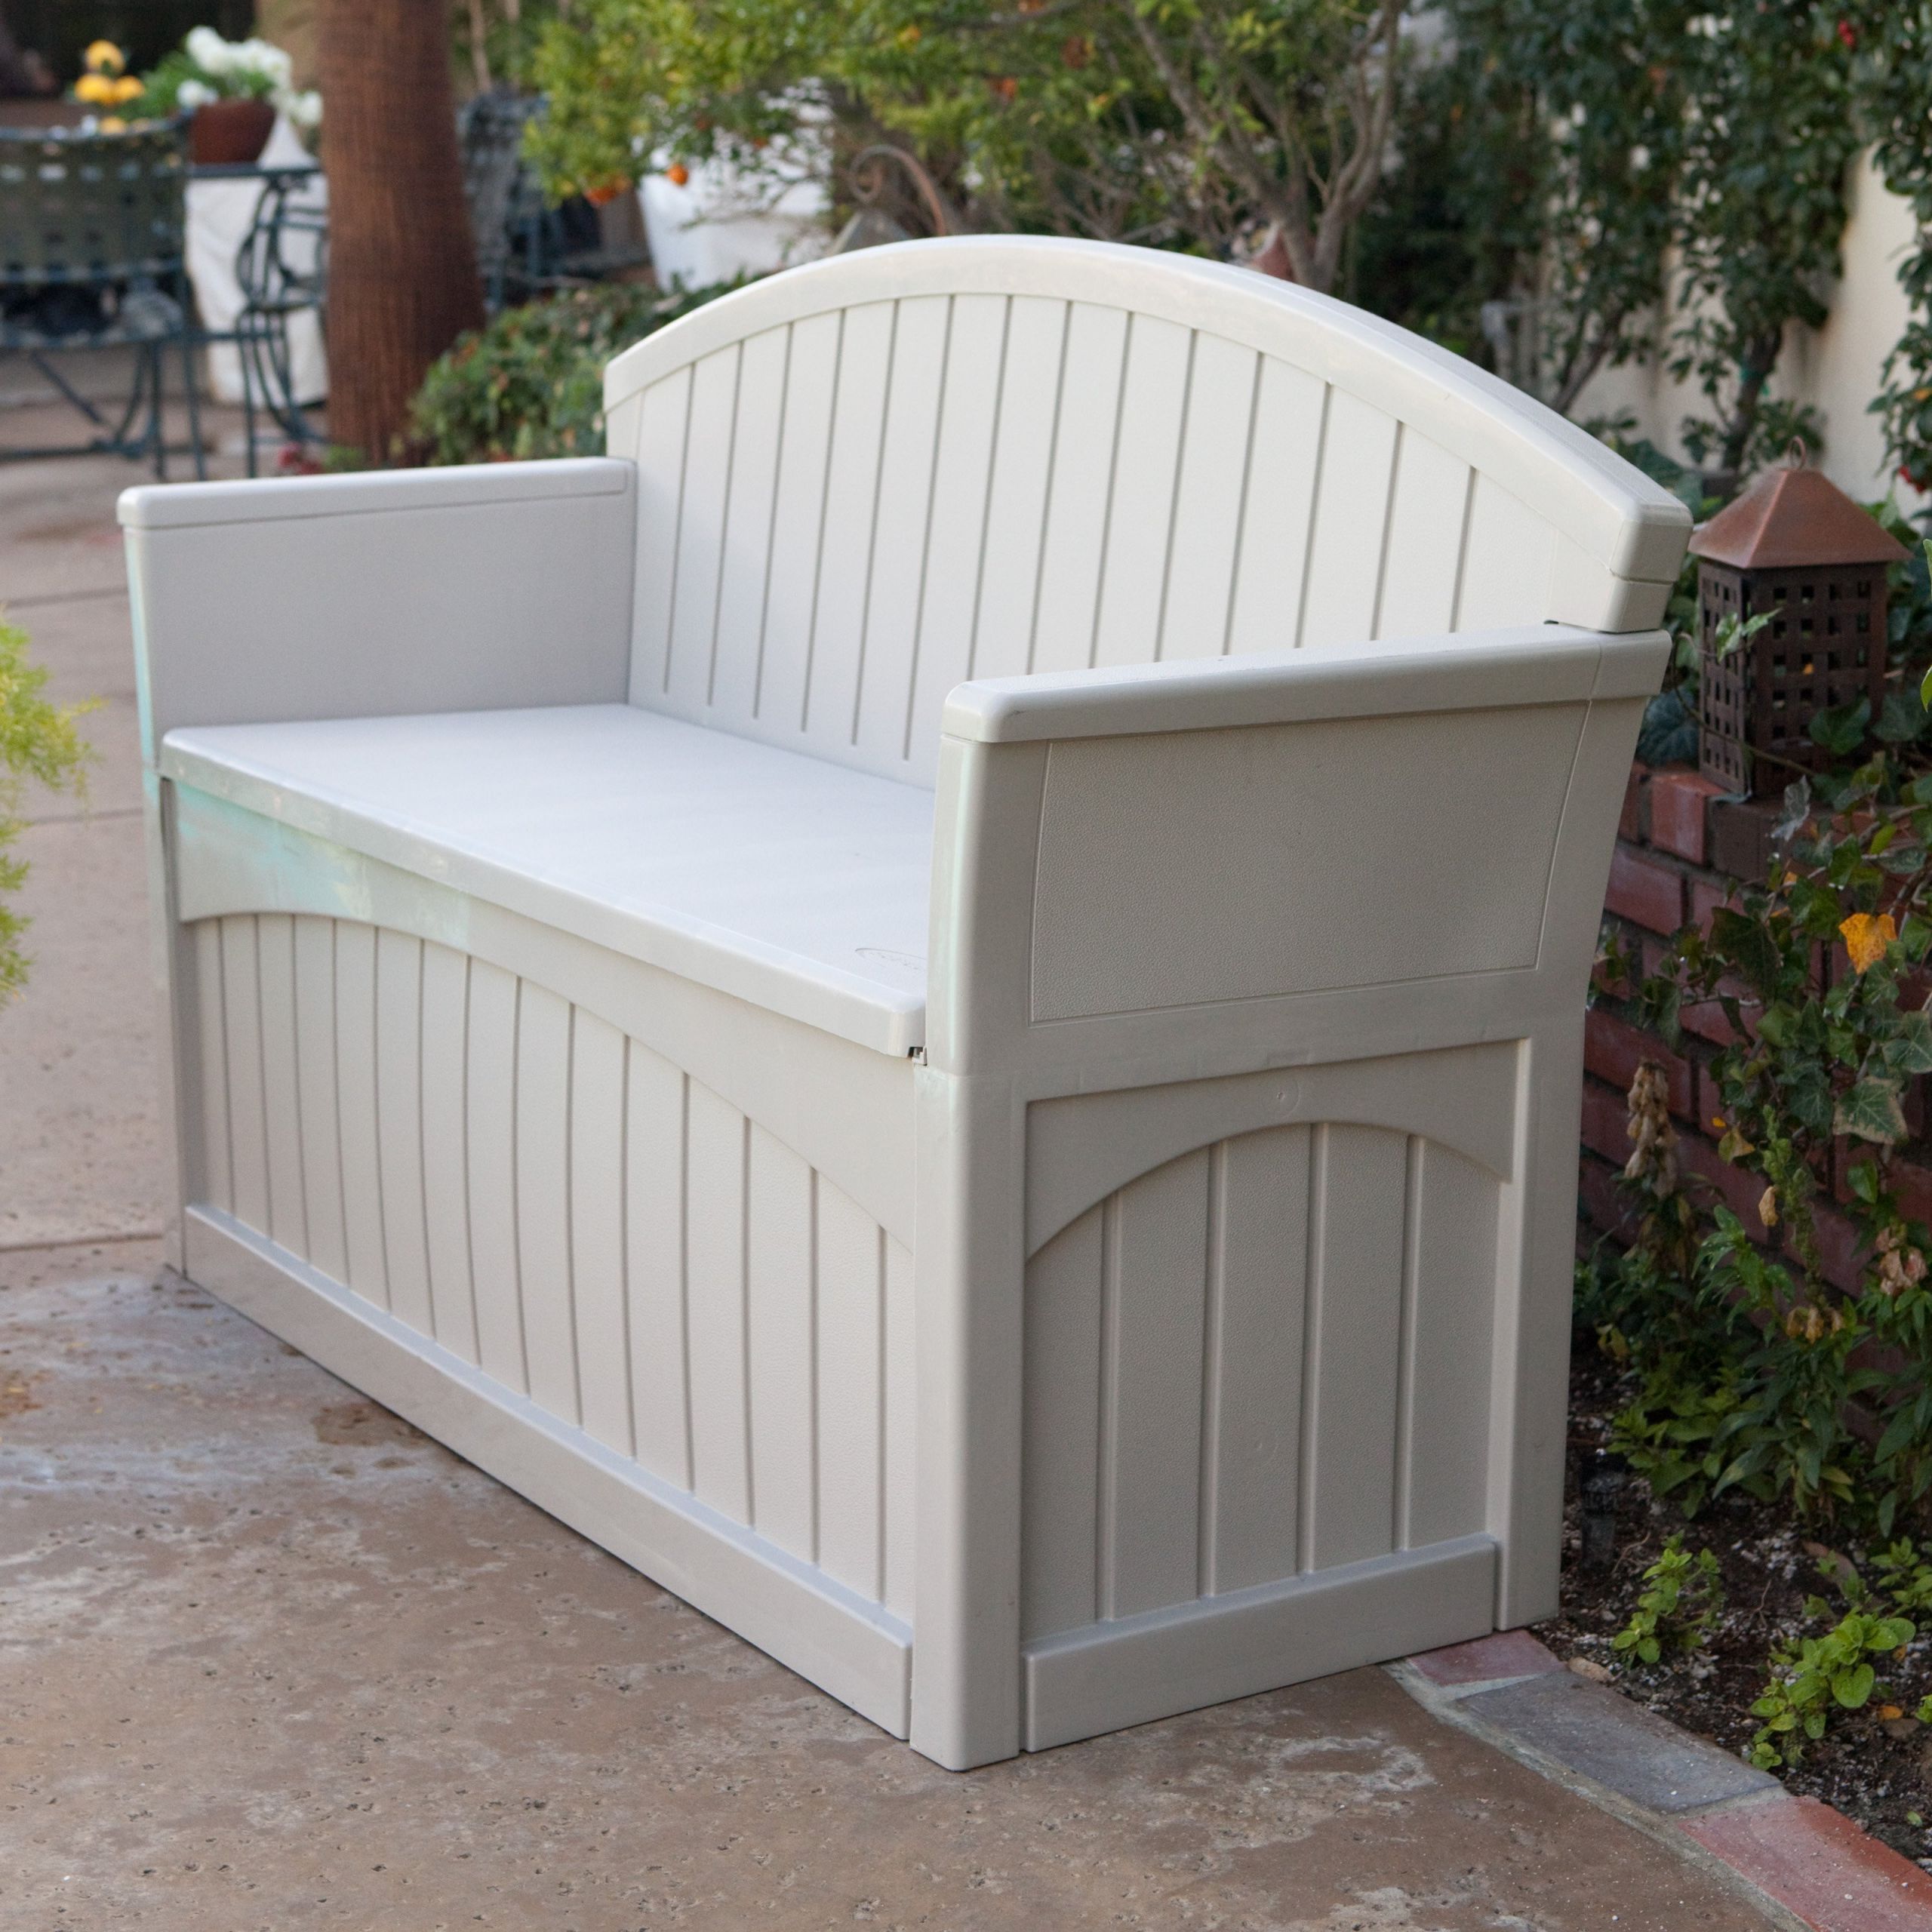 Suncast Outdoor Storage Bench
 Suncast Ultimate 50 Gallon Resin Patio Storage Bench